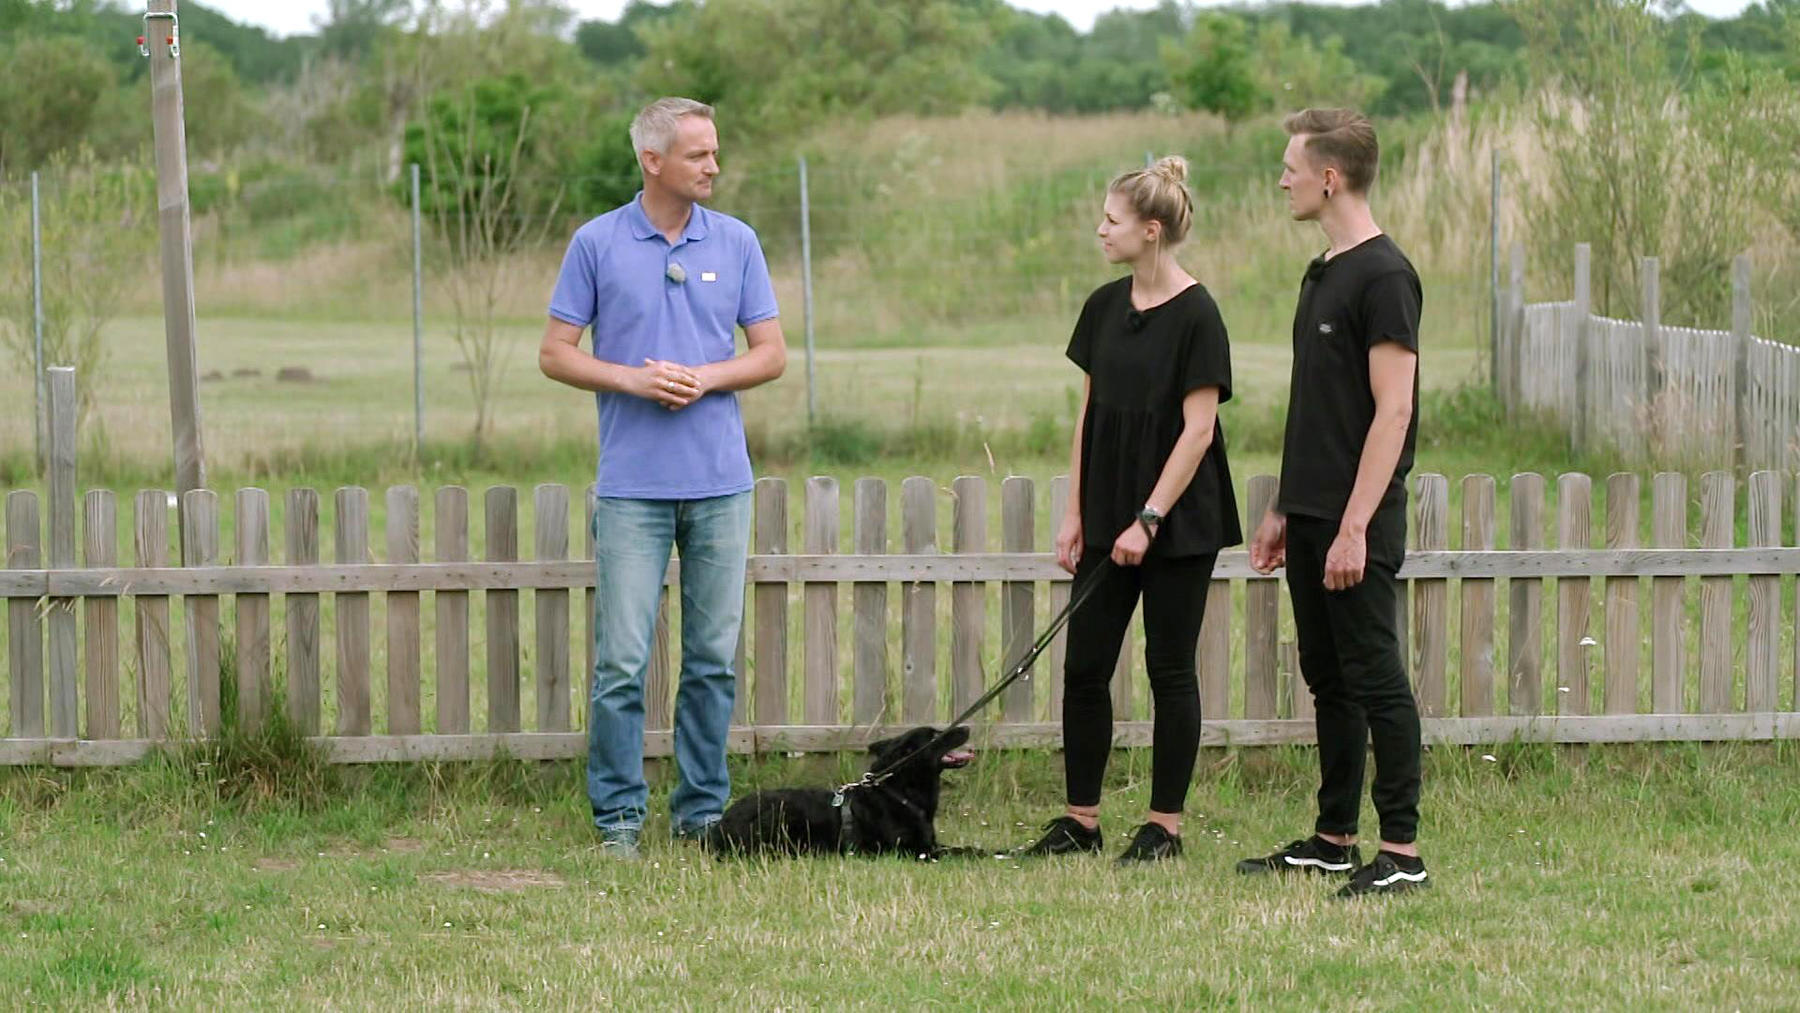 Folge 4 vom 7.11.2020 | Der Hundeprofi - Rütters Team | Staffel 1 | RTL+